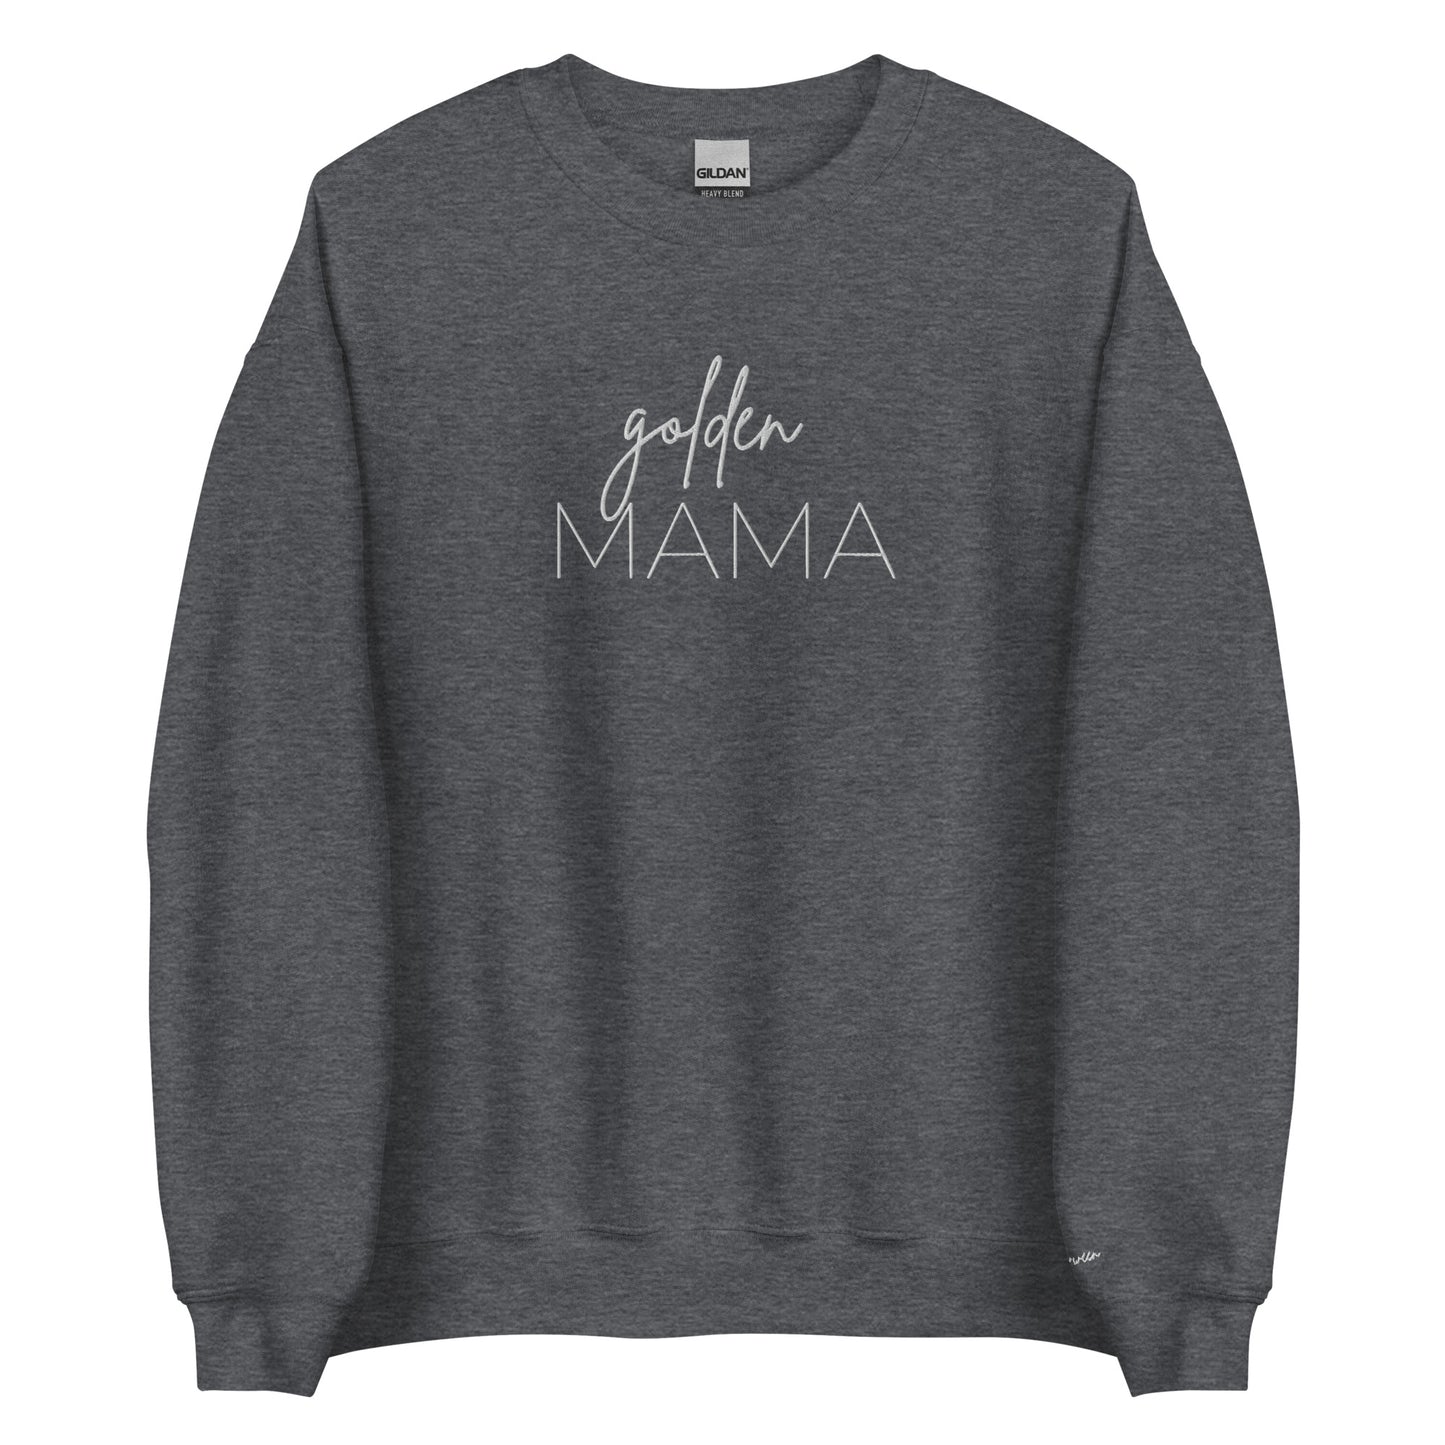 Embroidered Sweatshirt - GOLDEN MAMA